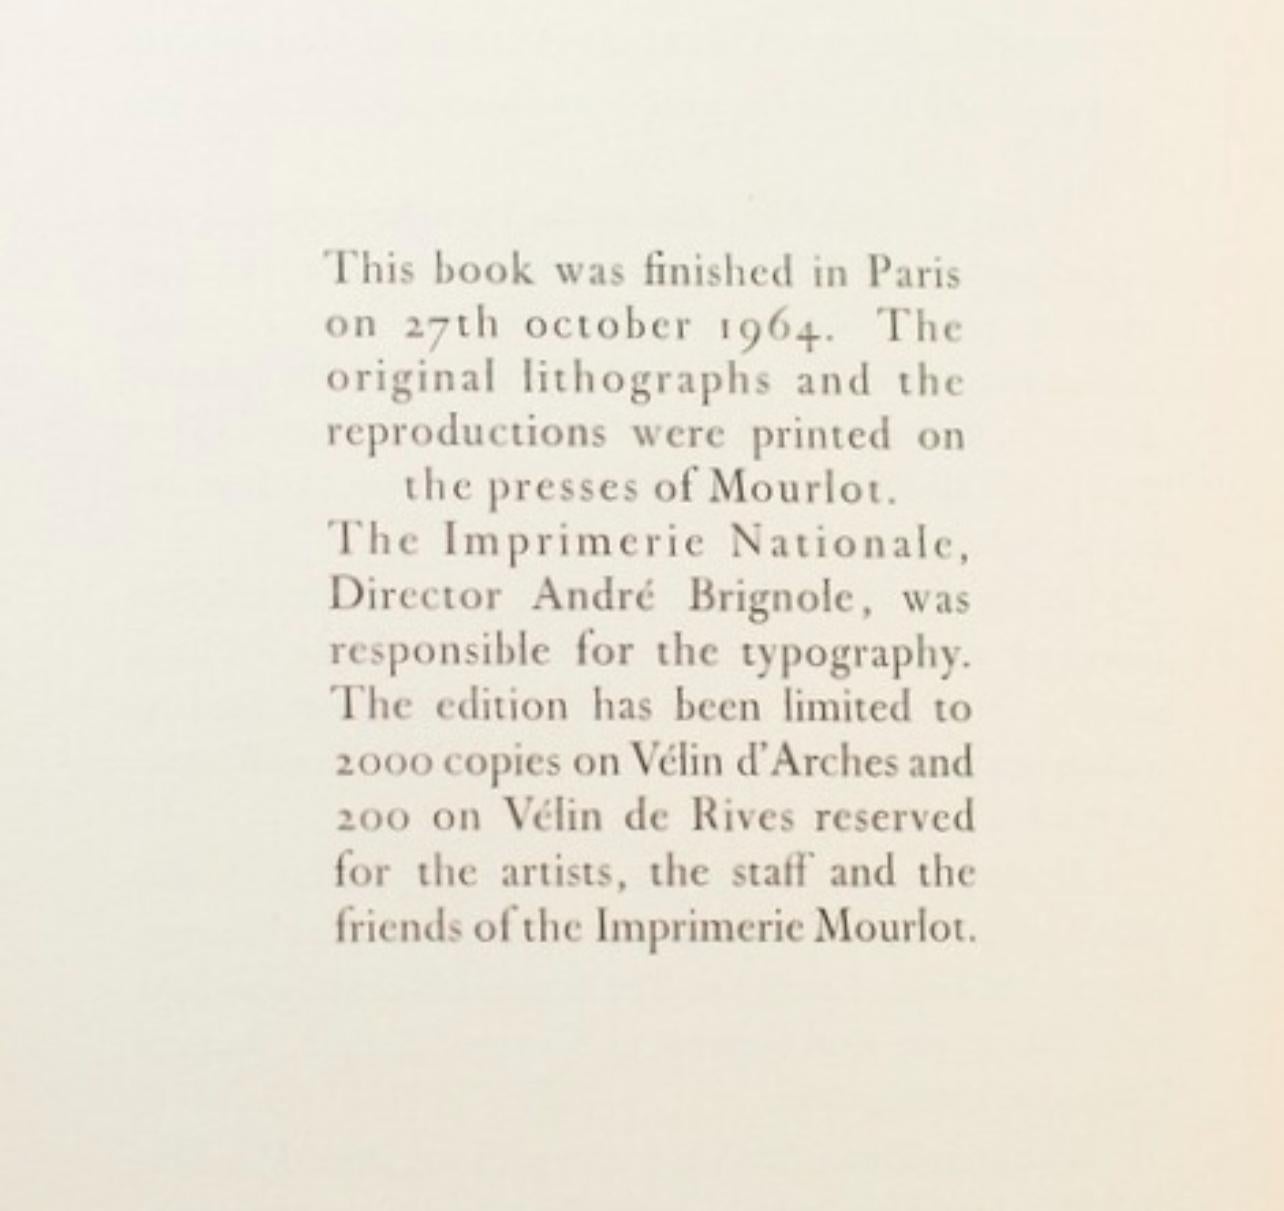 Calder, Composition, Prints from the Mourlot Press (after) For Sale 4